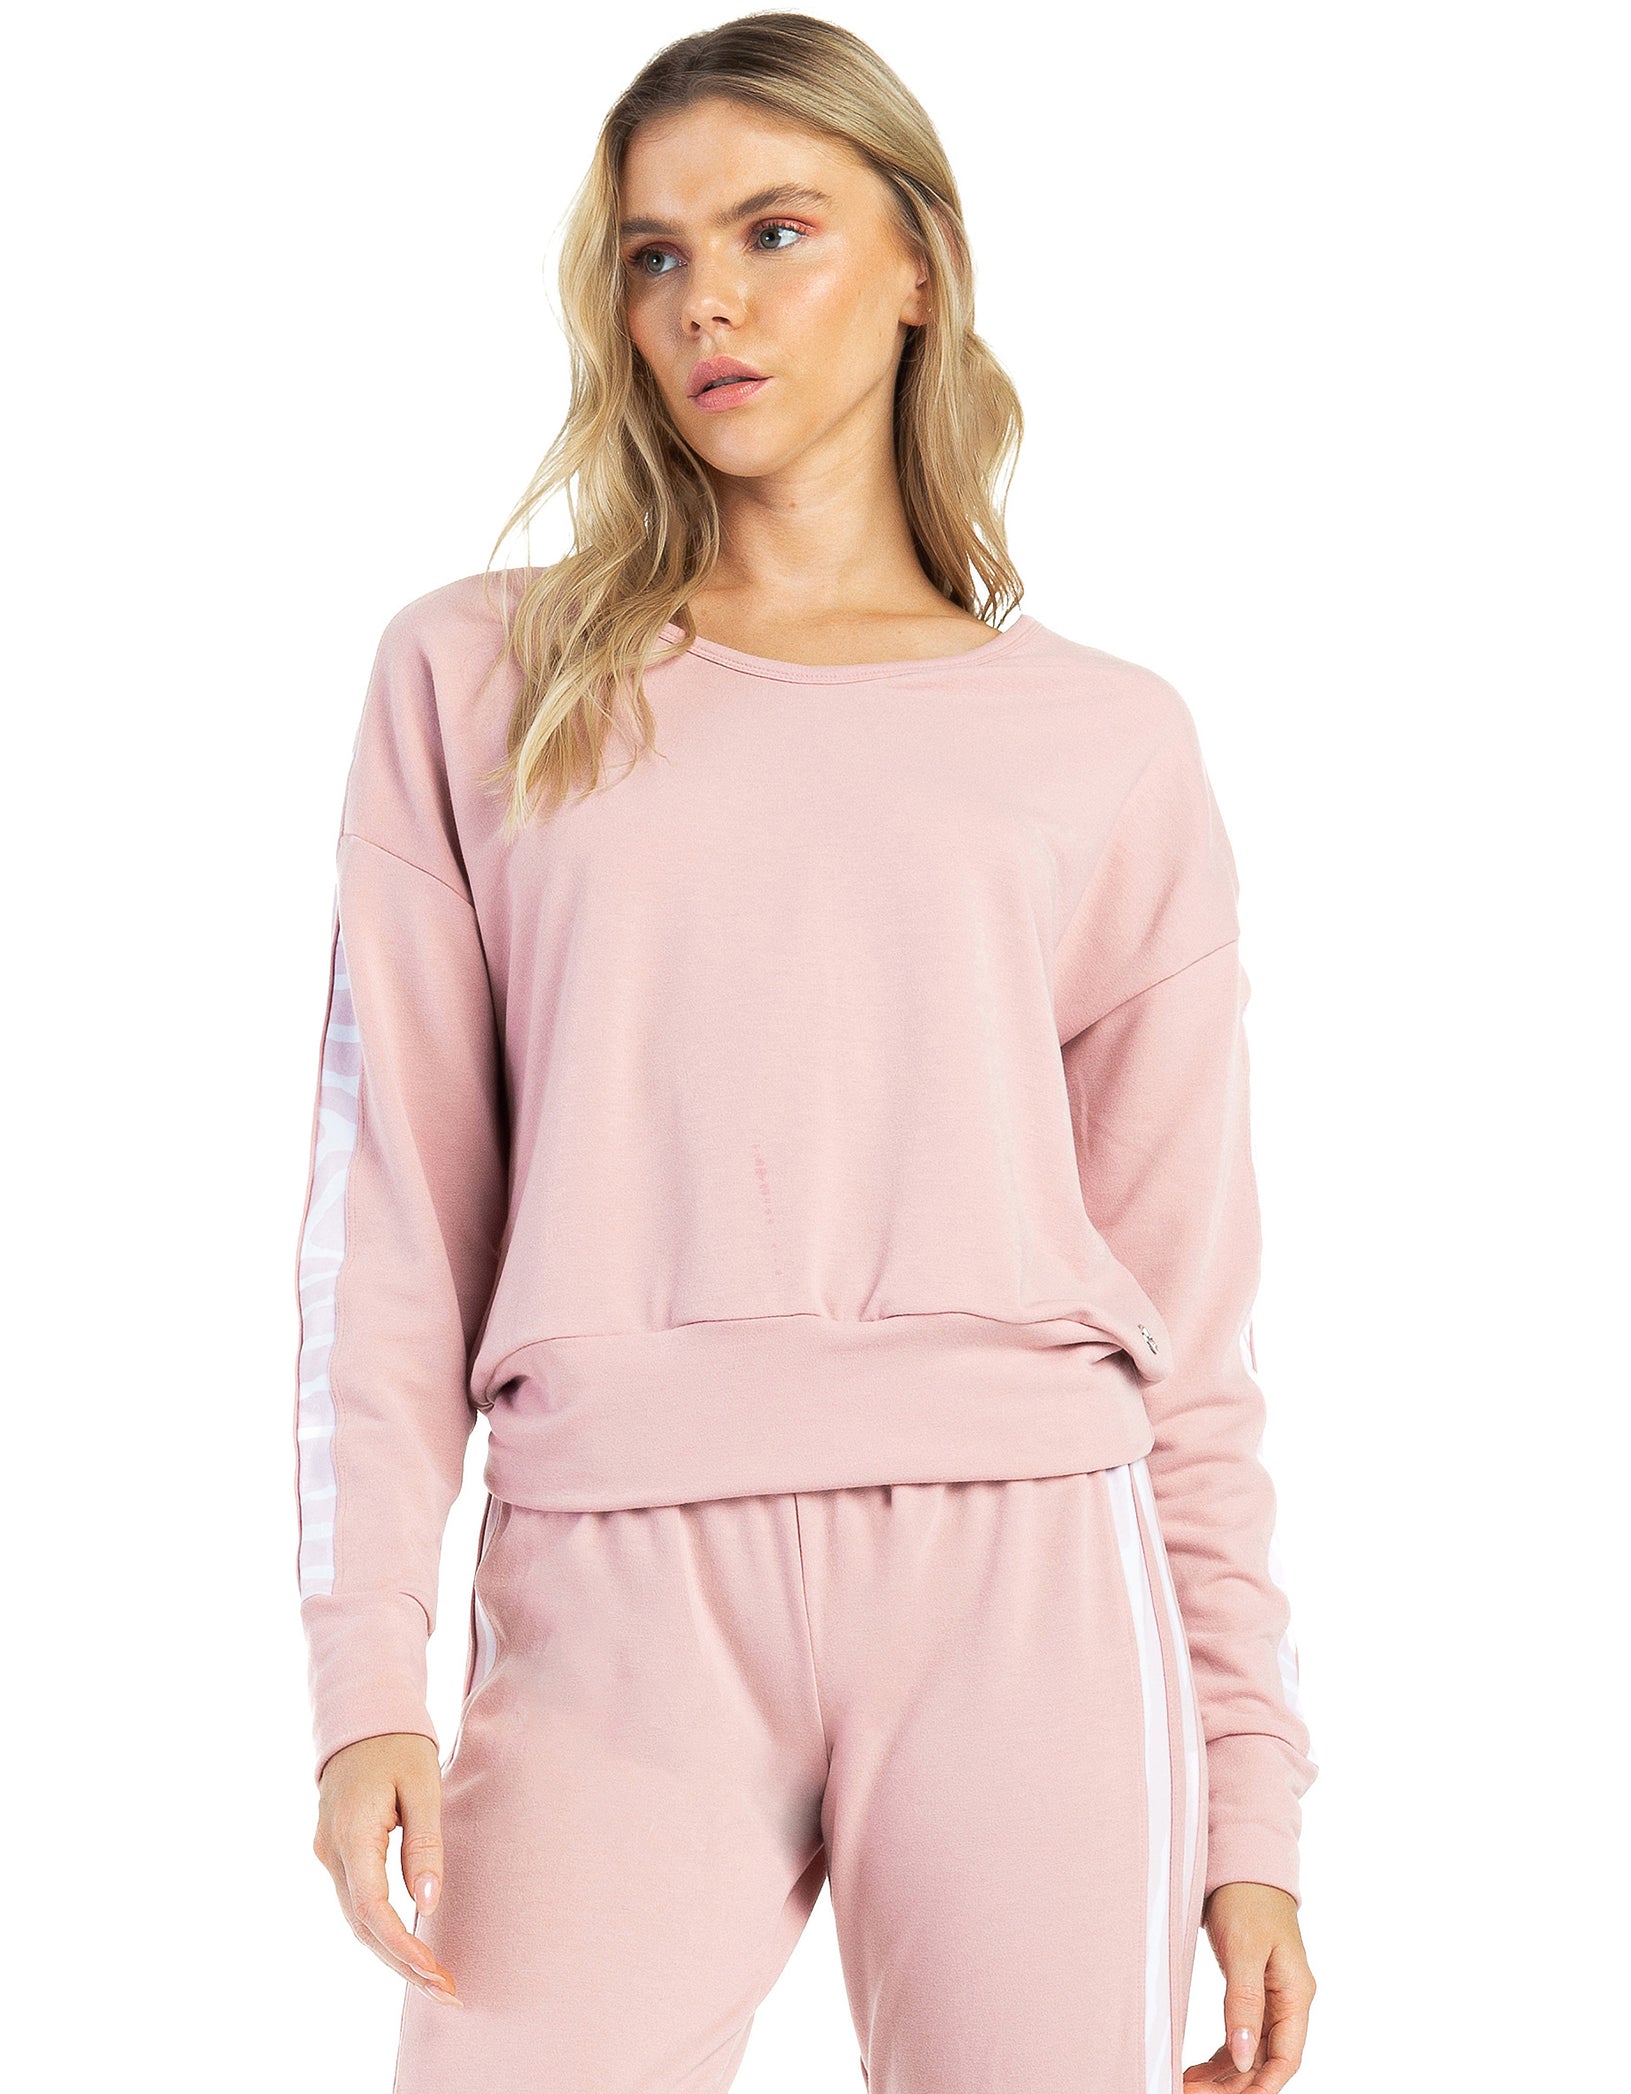 Vestem - Long Sleeve Shirt Amara pink Romance - BML383.C0243